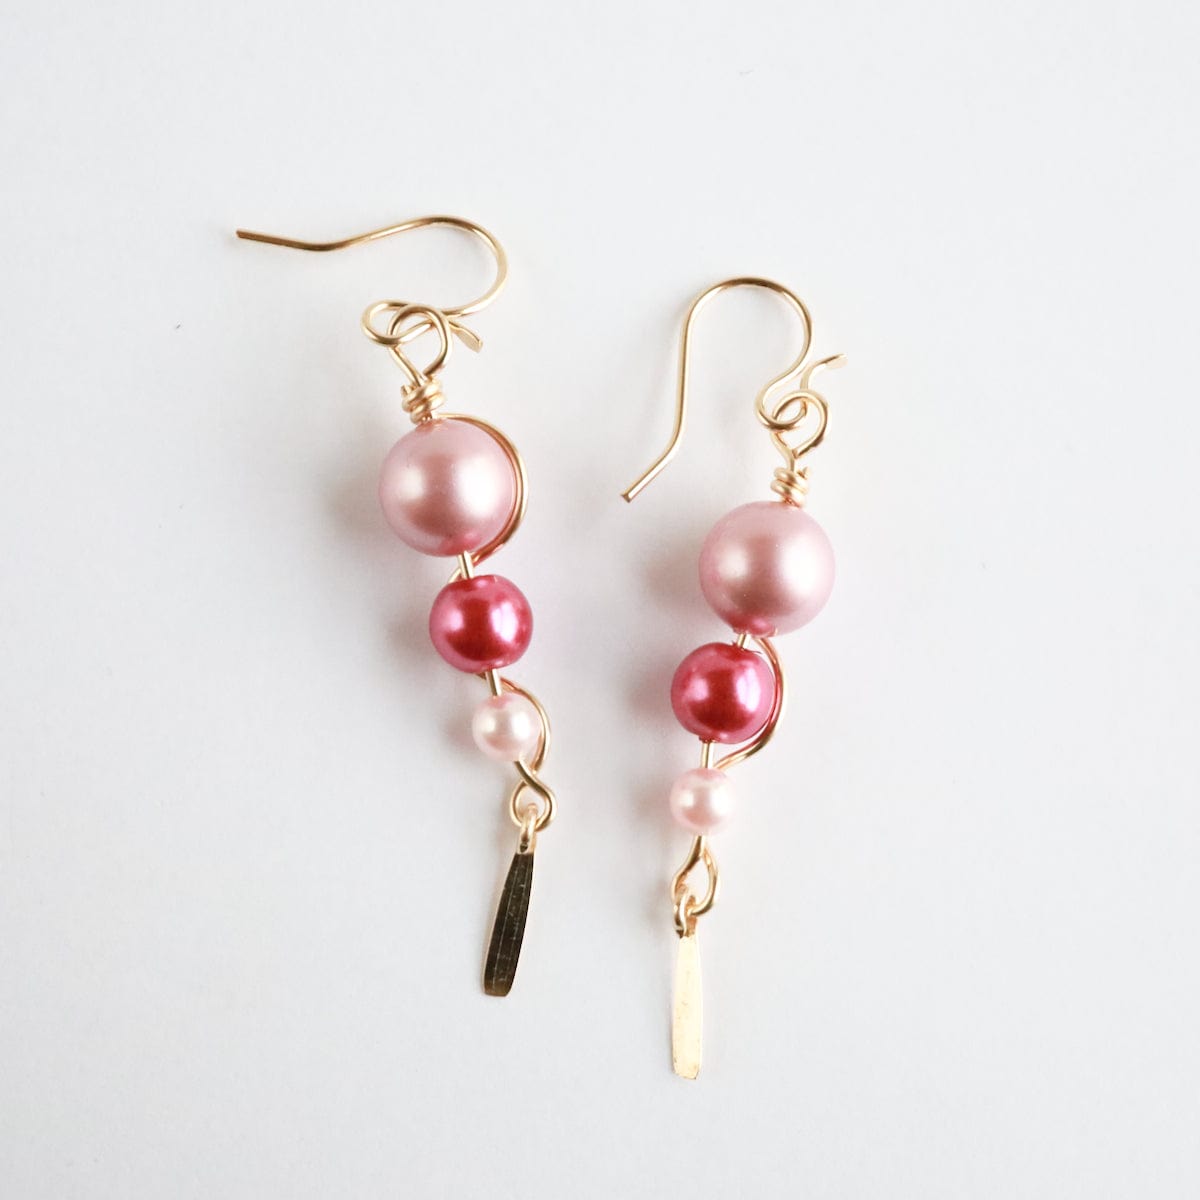 EAR-GF One Long Climb Rose Pearl Earring - Gold Filled